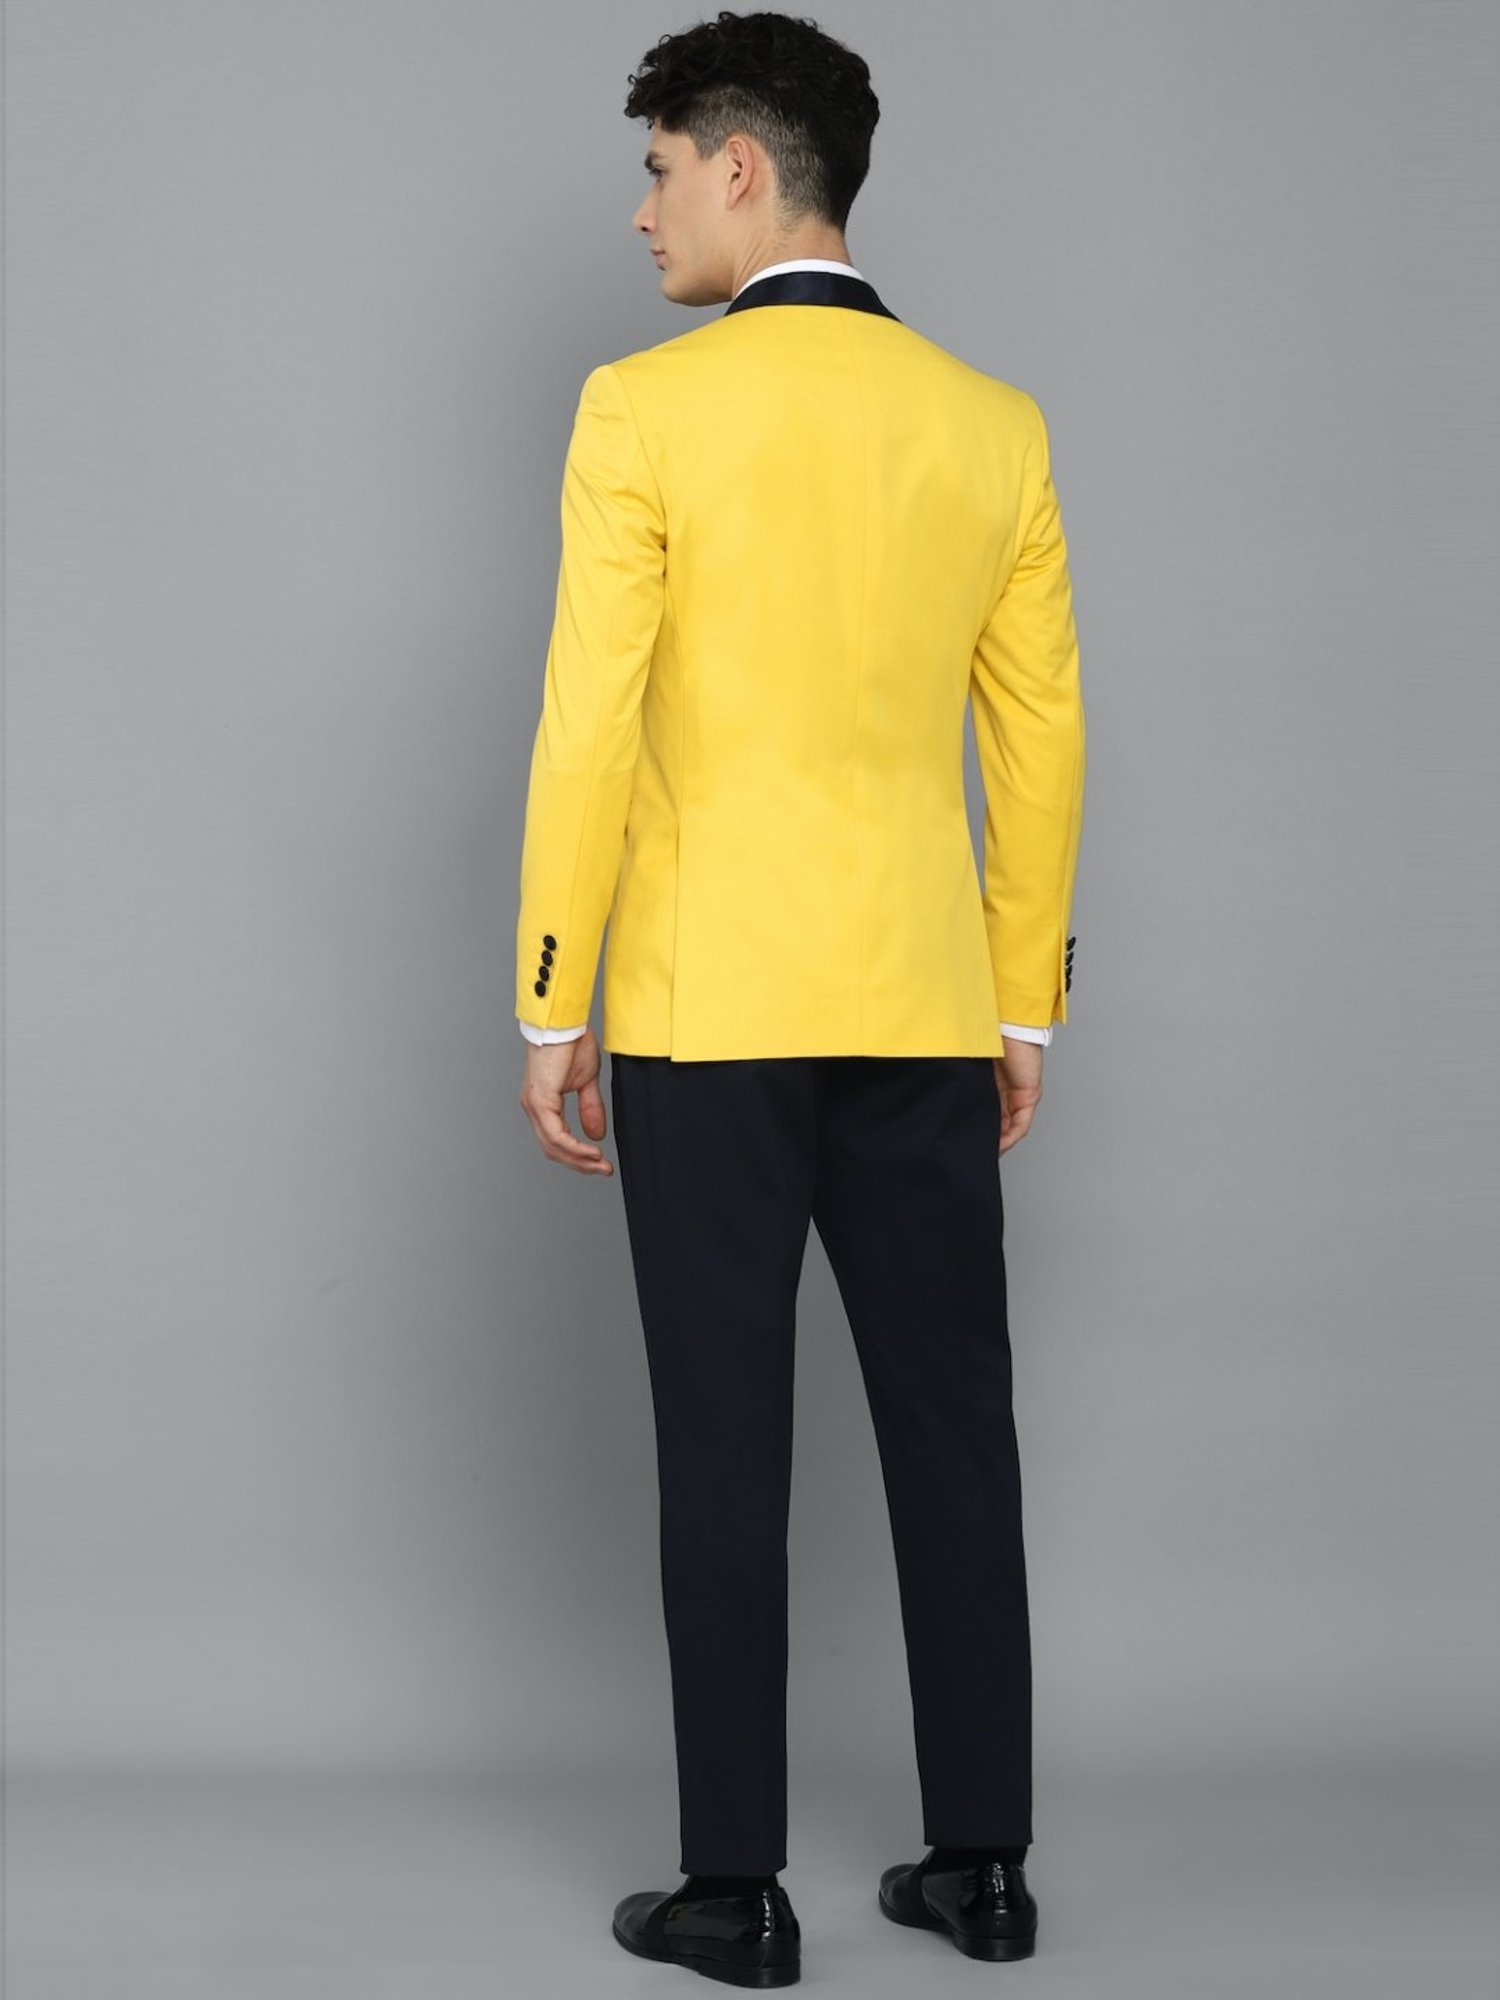 Men 3 Piece Suit Yellow Wedding Formal Slim Fit Dinner Suit Sainly– SAINLY